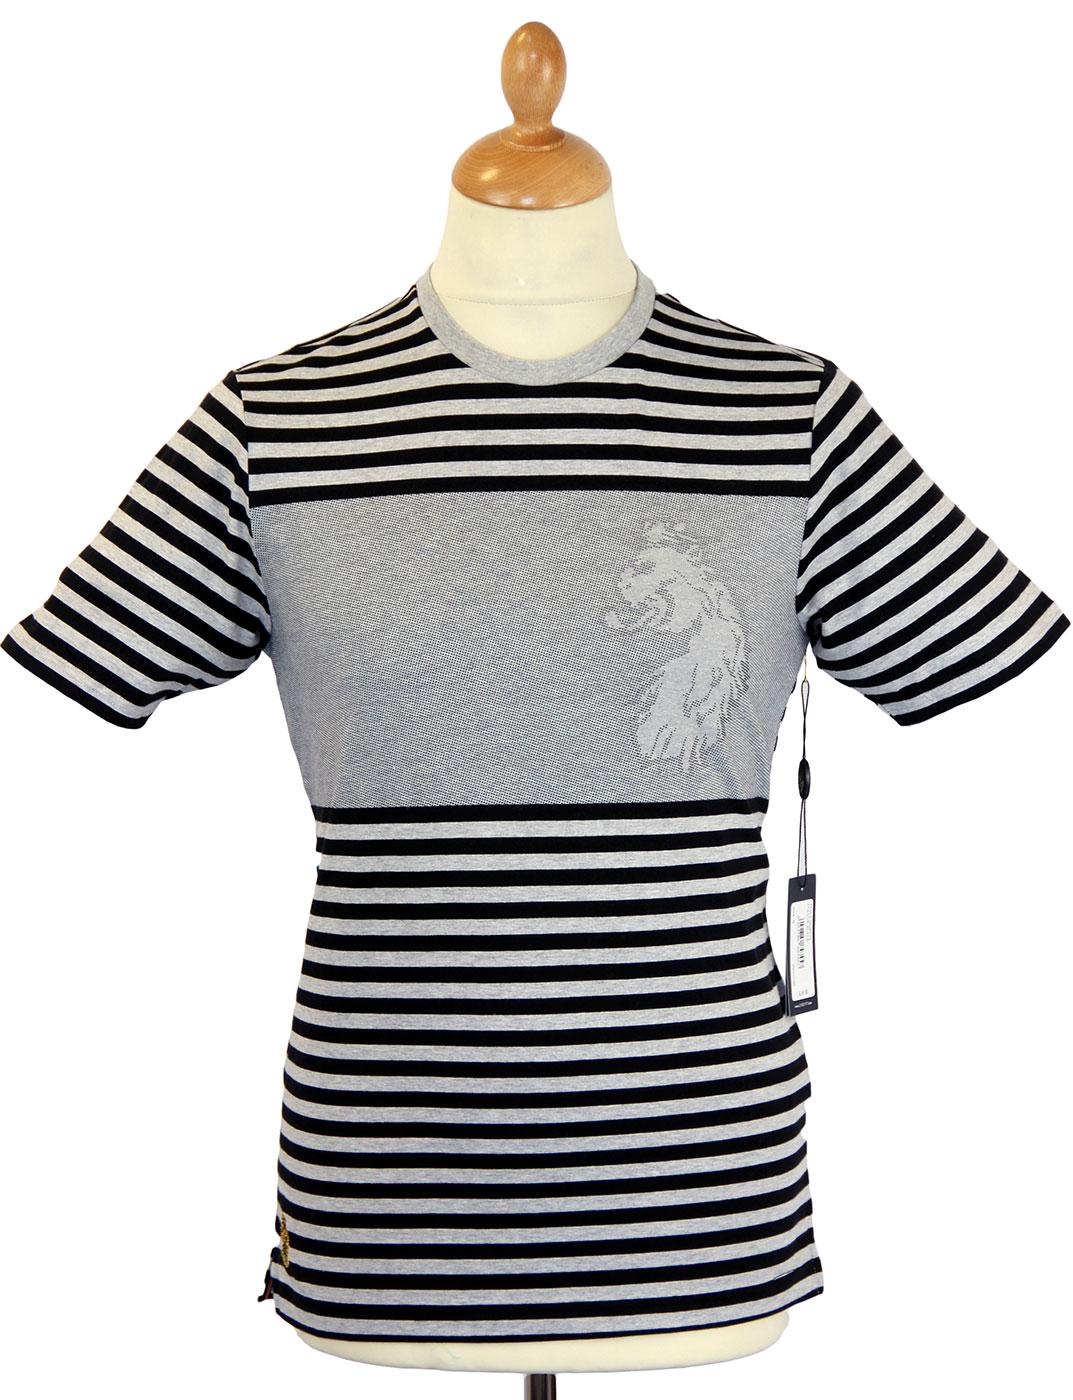 Mobots LUKE 1977 Retro Stripe & Spot Print T-Shirt